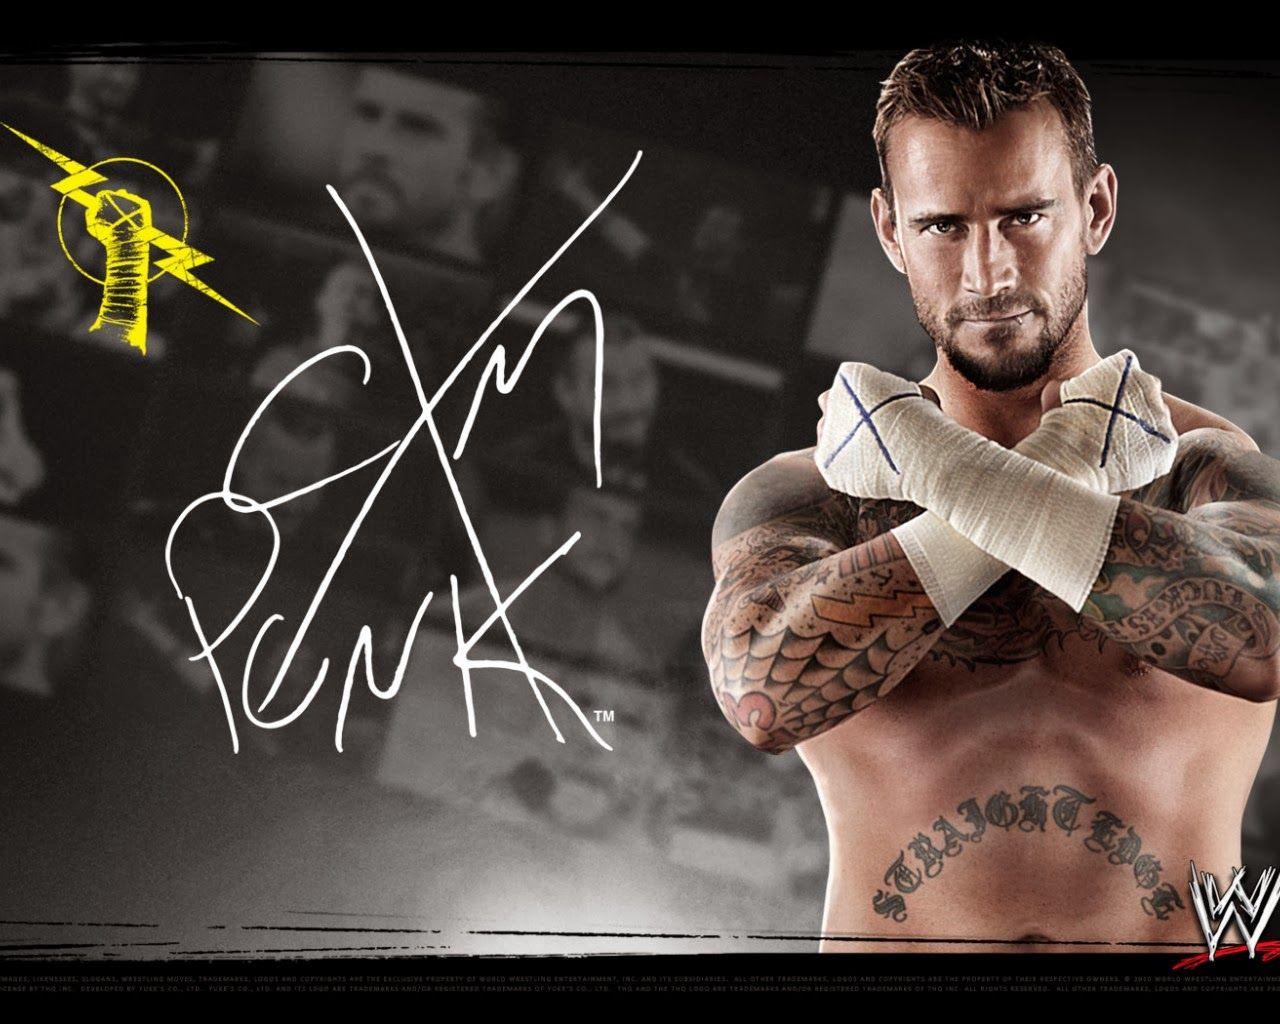 CM Punk HD Wallpaper Free Download. WWE HD WALLPAPER FREE DOWNLOAD